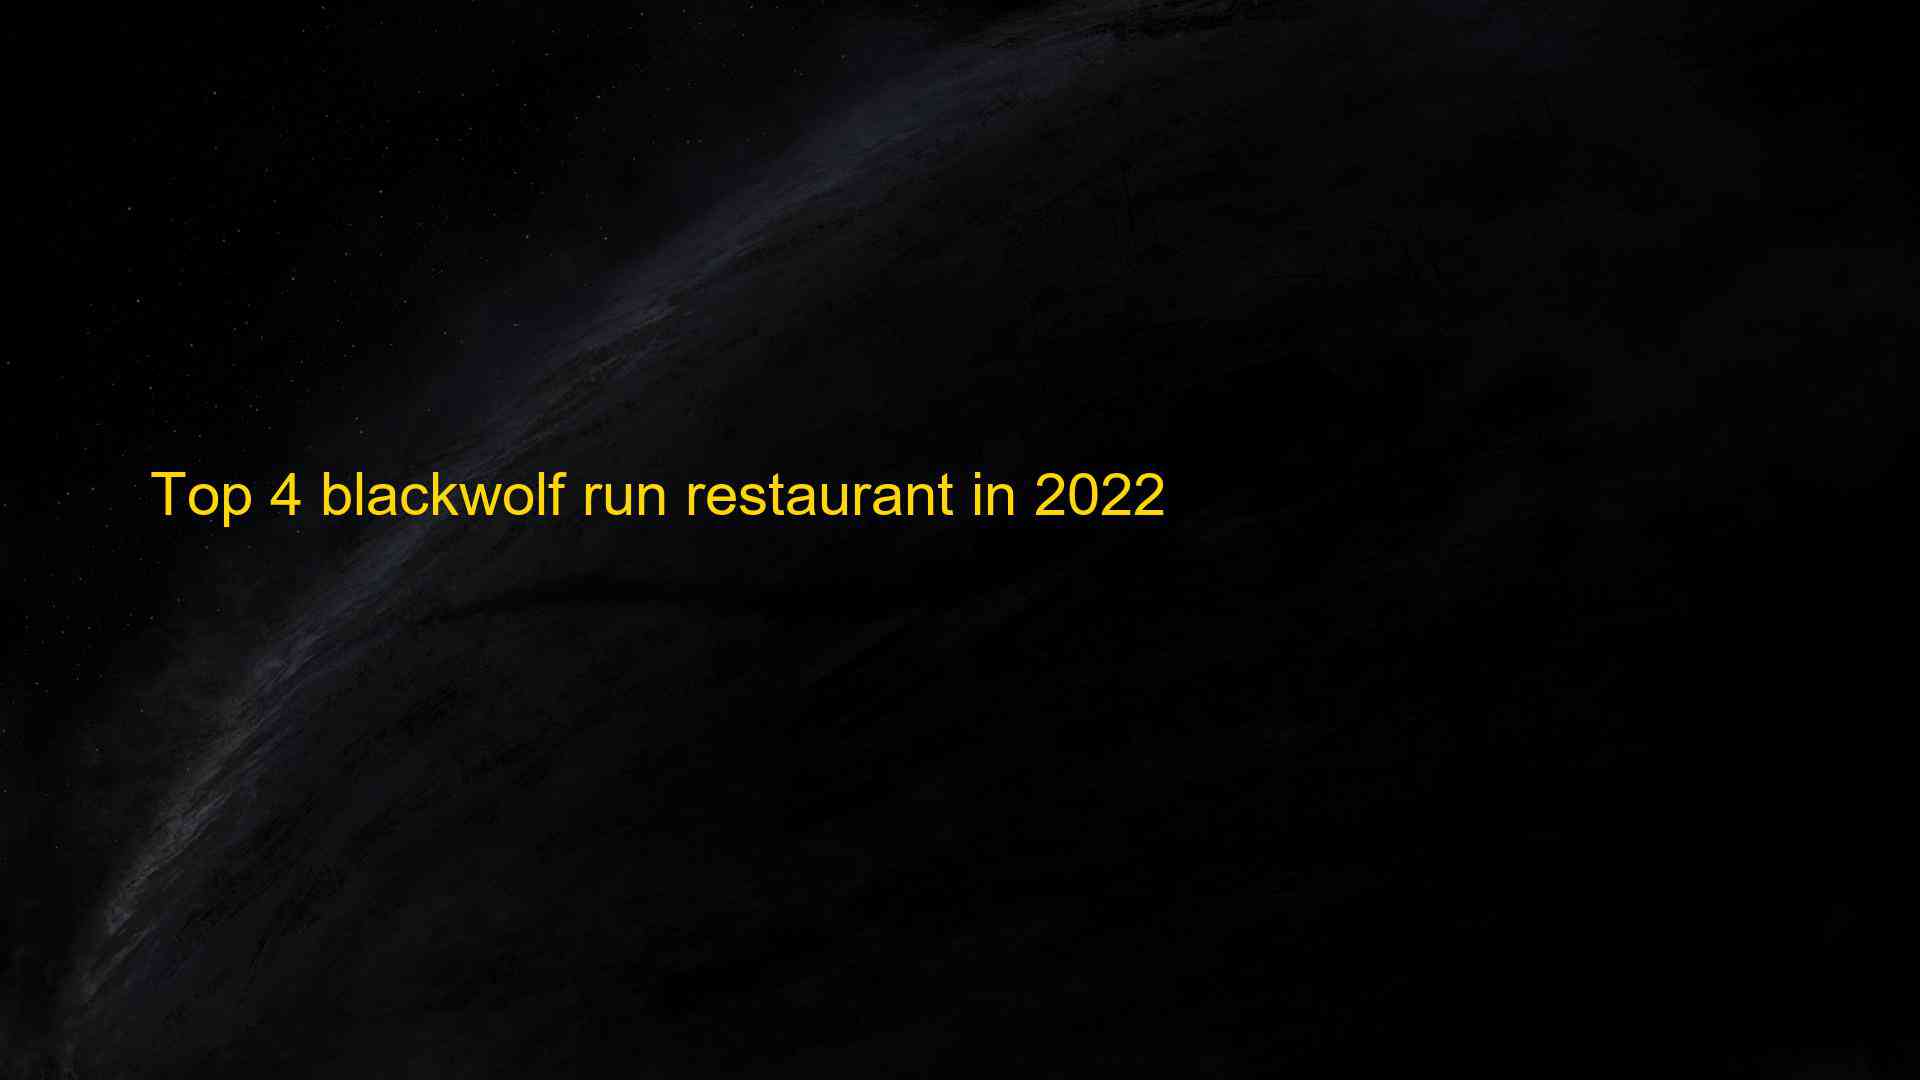 Top 4 blackwolf run restaurant in 2022 1663175278